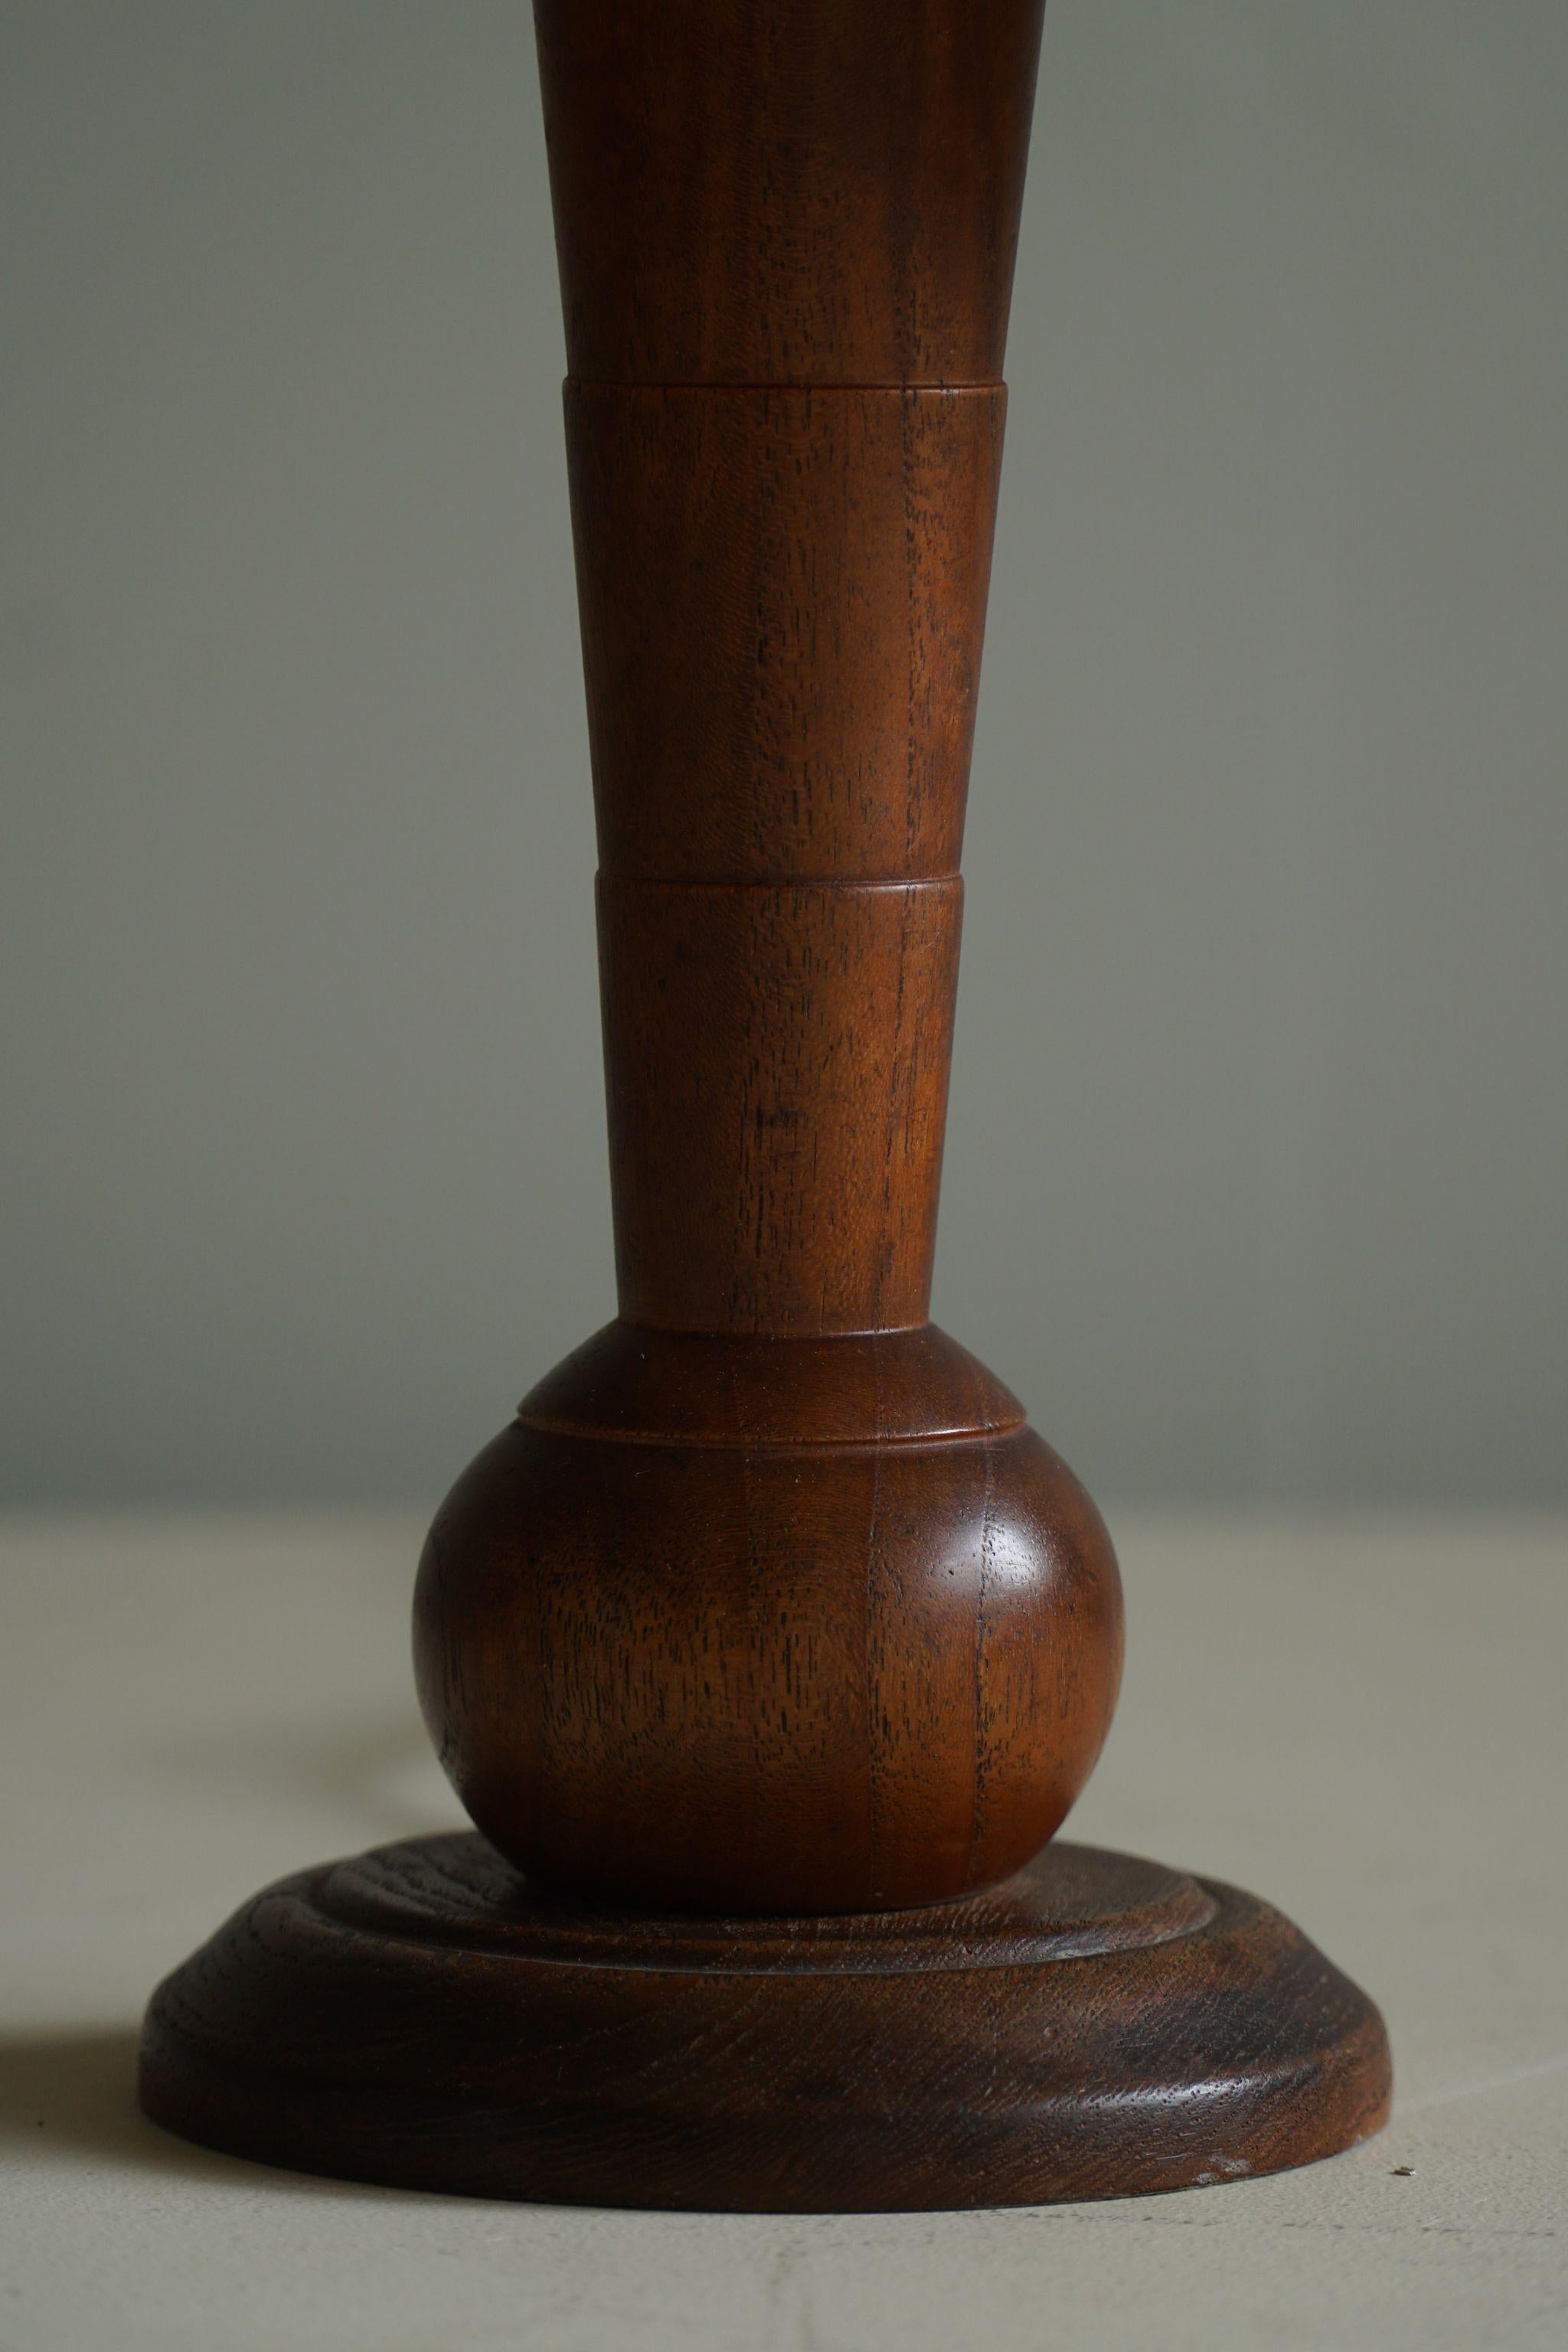 20th Century Sculptural Wooden Teak Art Deco Table Lamp, Danish Modern, 1940s For Sale